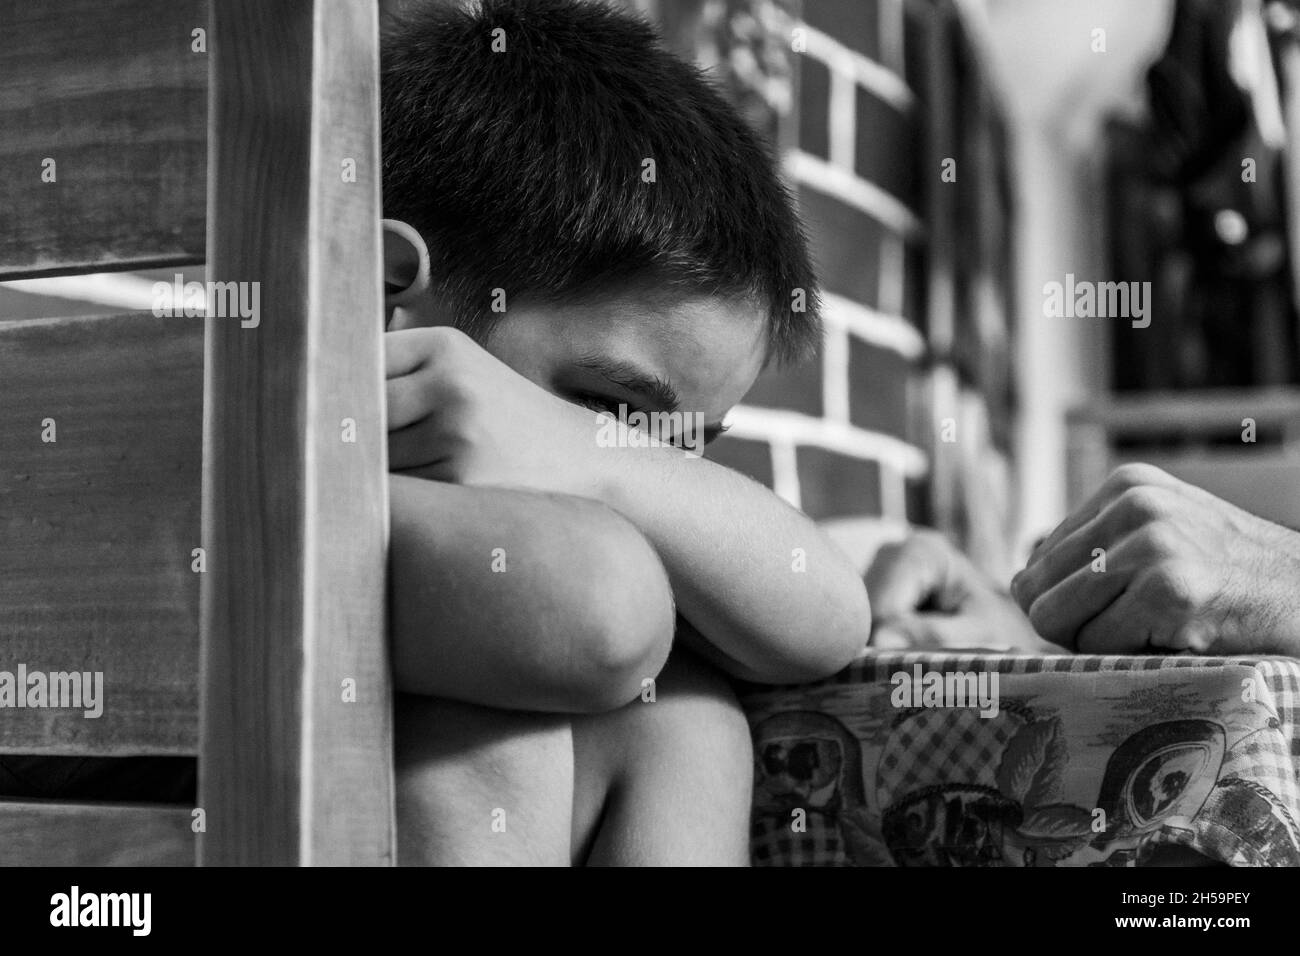 HABANA, KUBA - 04. Sep 2020: Eine Graustufenaufnahme eines verärgerten Kindes Stockfoto